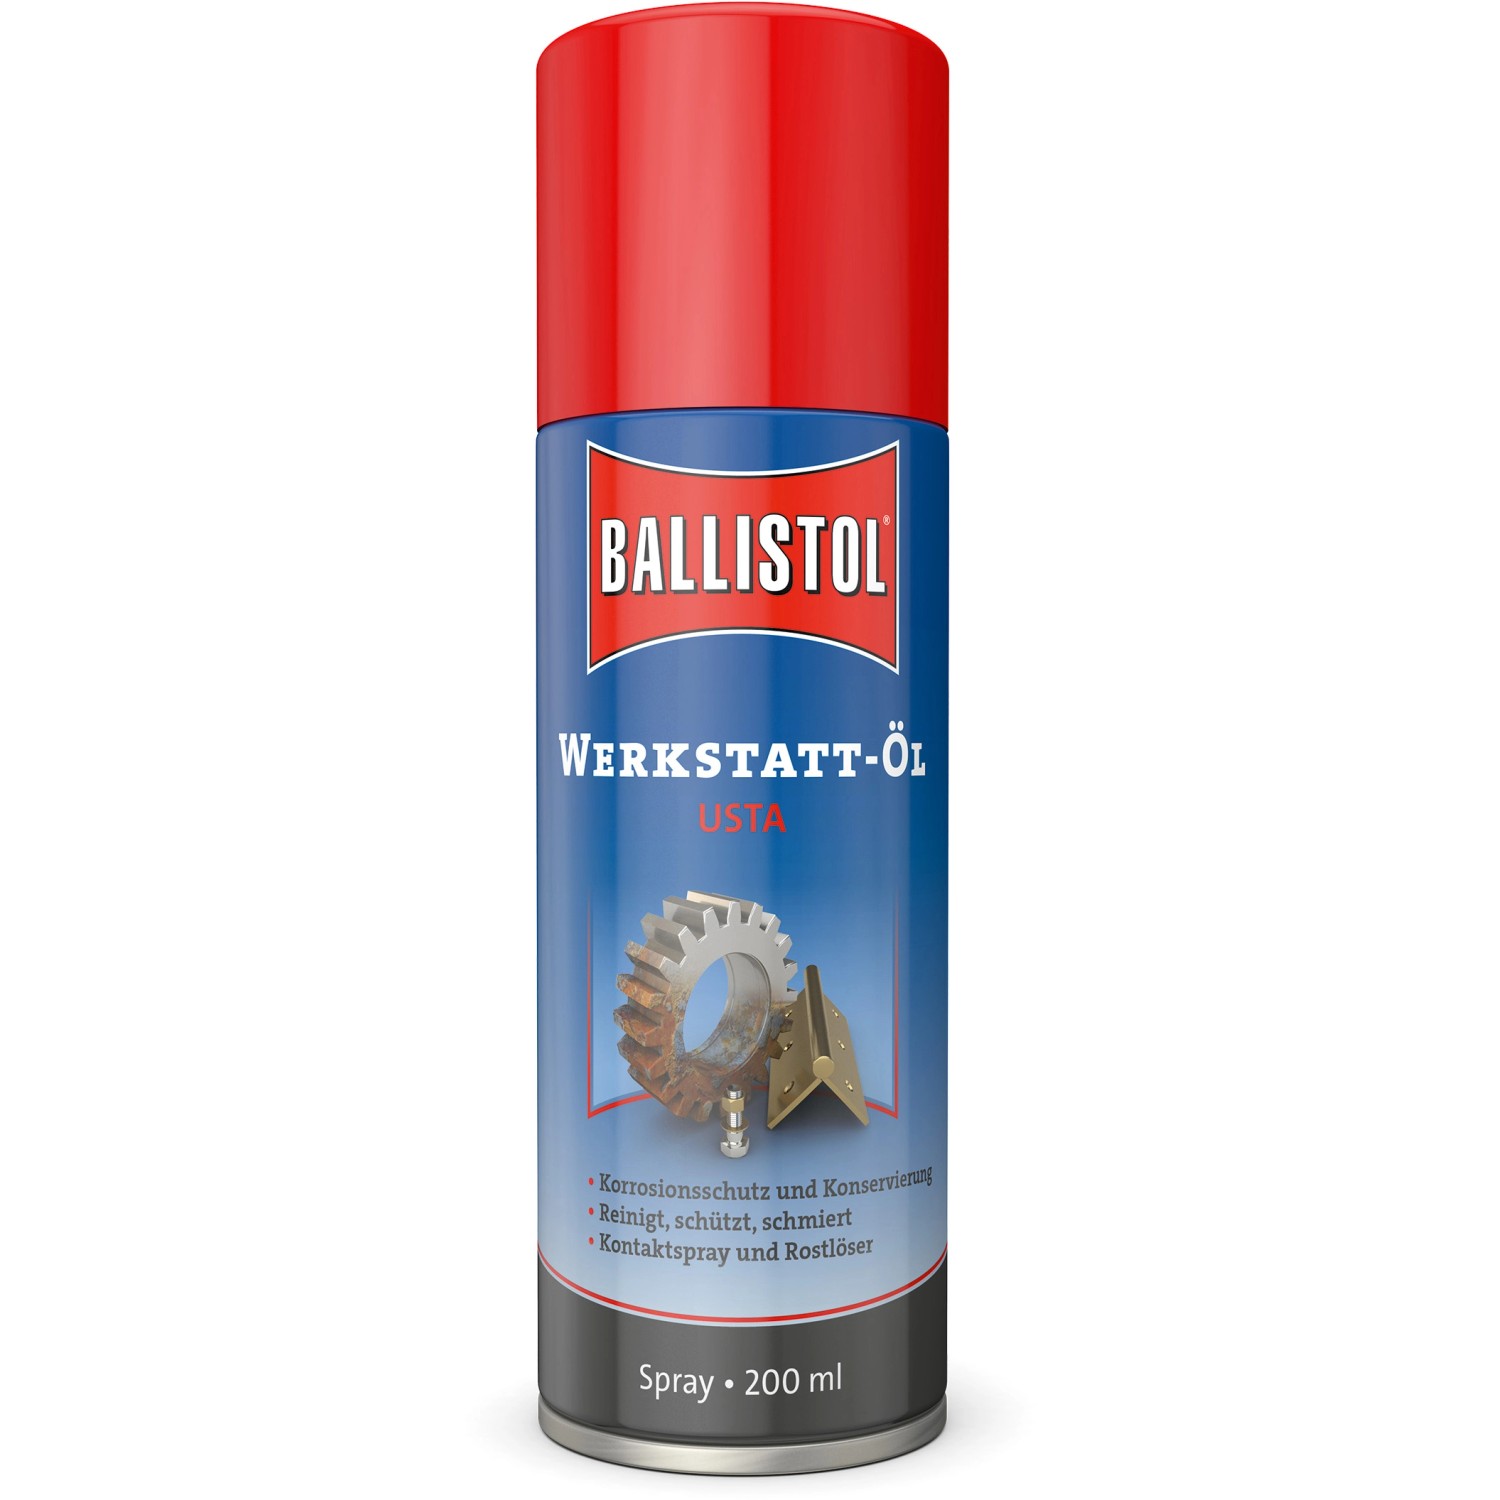 Ballistol Usta Werkstatt-Öl Spray 200 ml